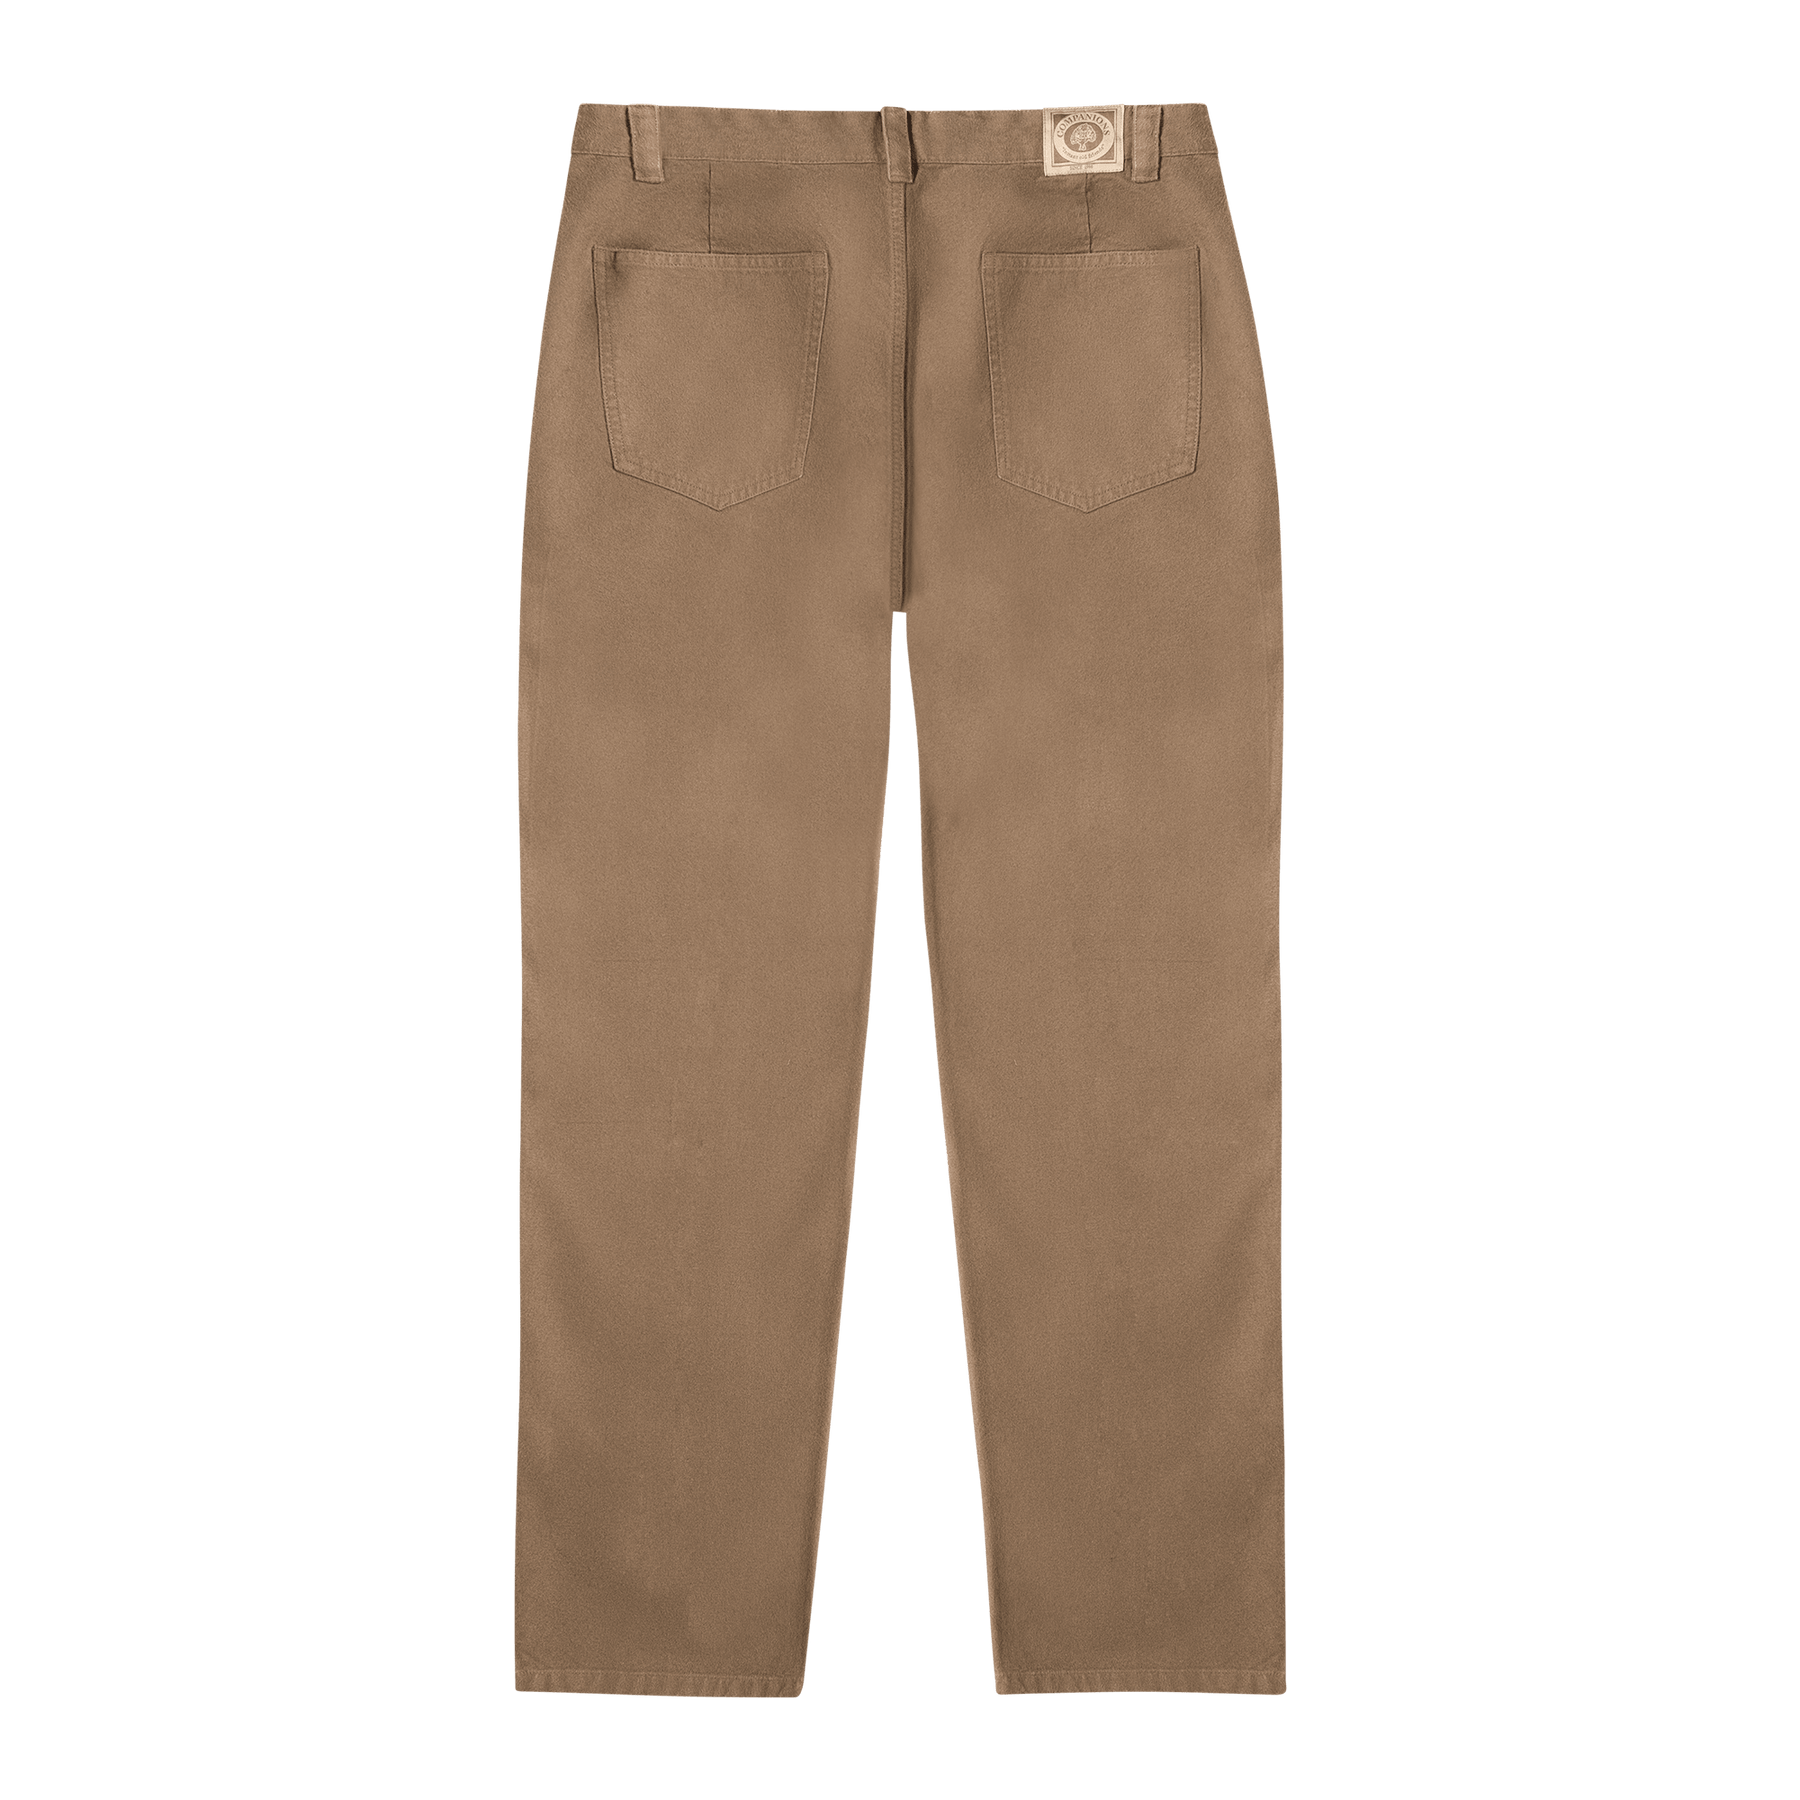 Do-All Shammy Pants – The Mossy Oak Store